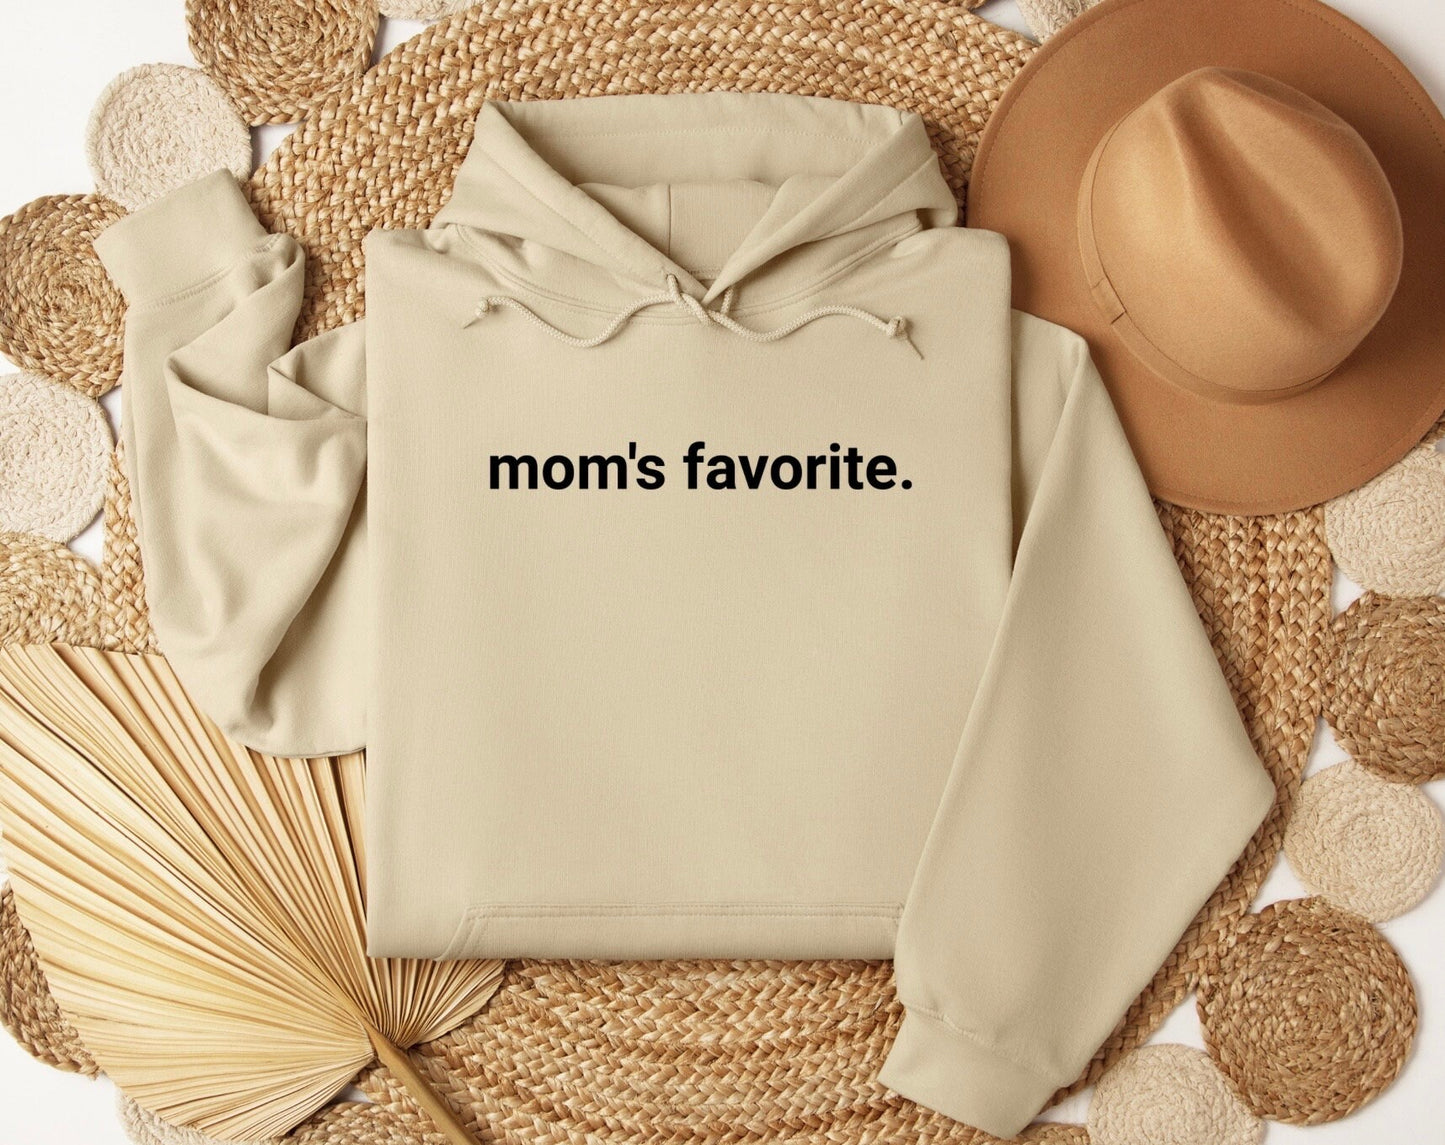 Moms Favorite Sweatshirt, Moms Favorite Shirt, Moms Favorite Crewneck, Moms Favorite Sweater, Oversized Sweater, Comfy Sweatshirt, Girl Gift